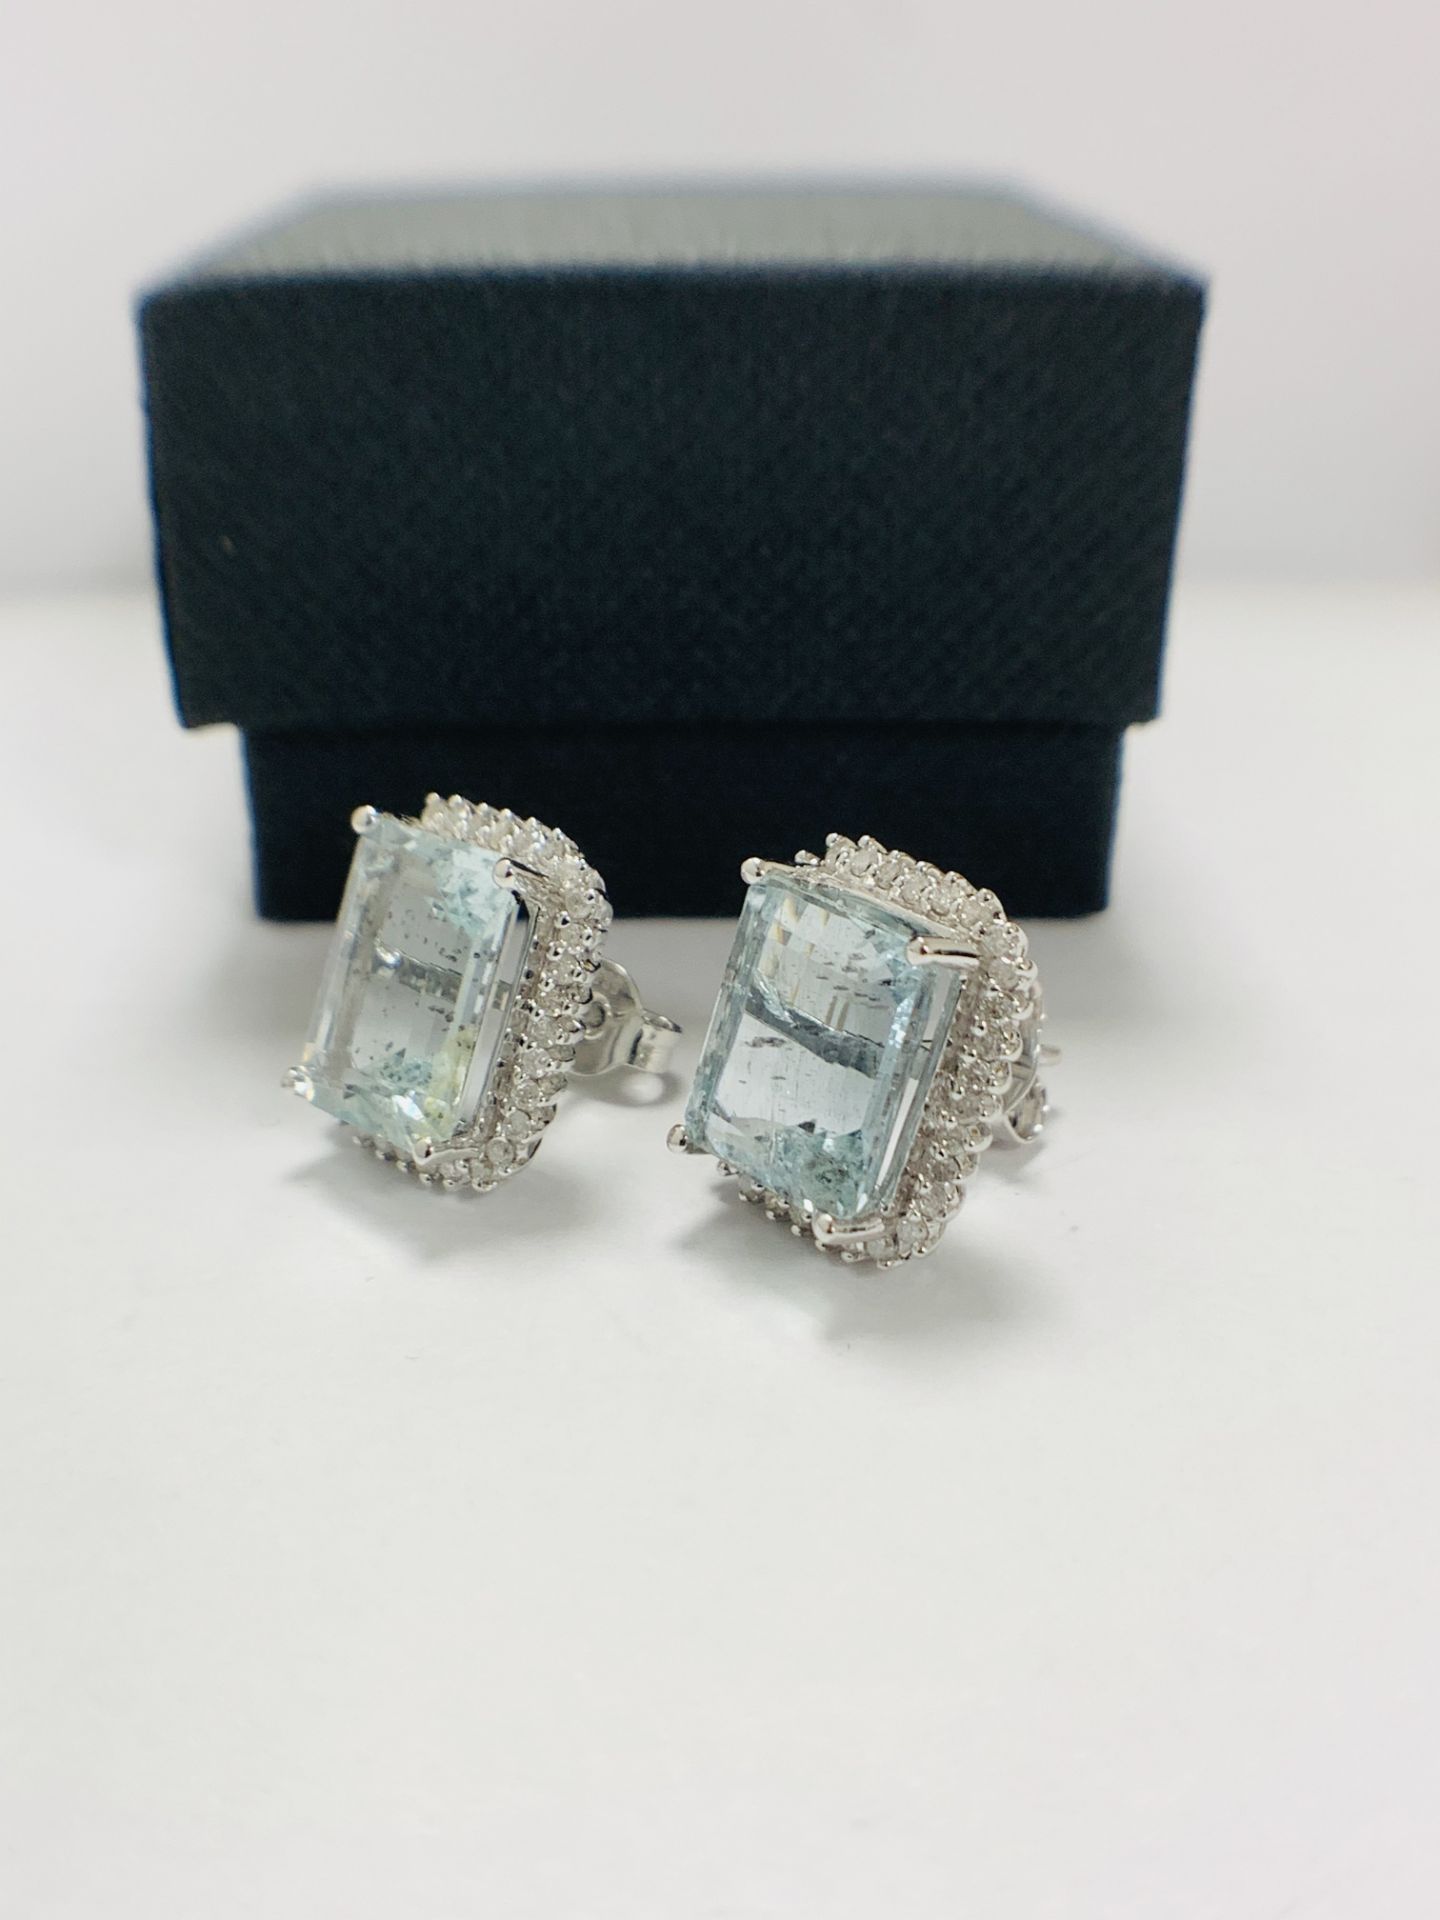 14ct White Gold Aquamarine And Diamond Stud Earrings - Image 2 of 10